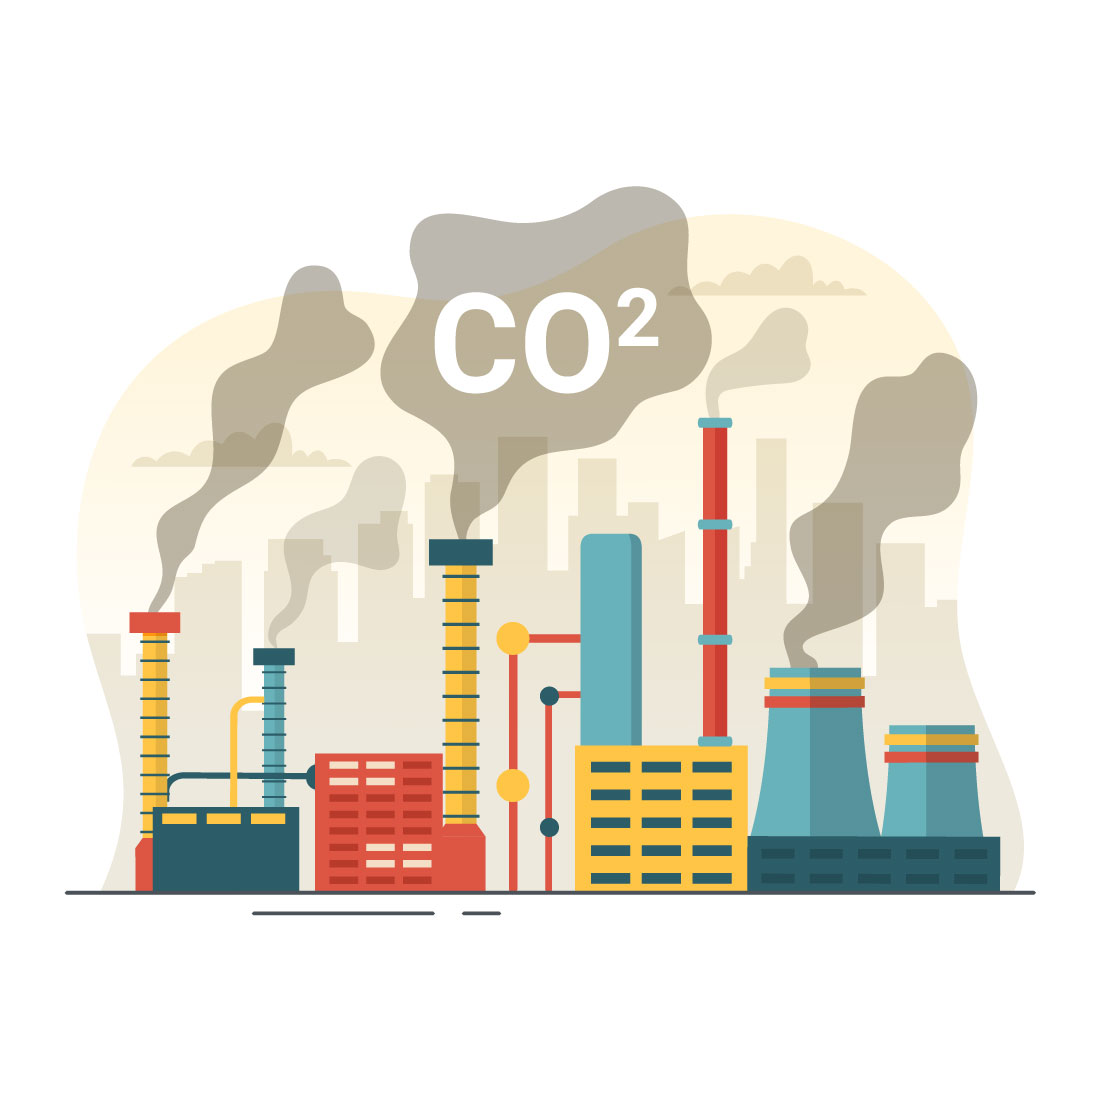 12 Carbon Dioxide or CO2 Illustration cover image.